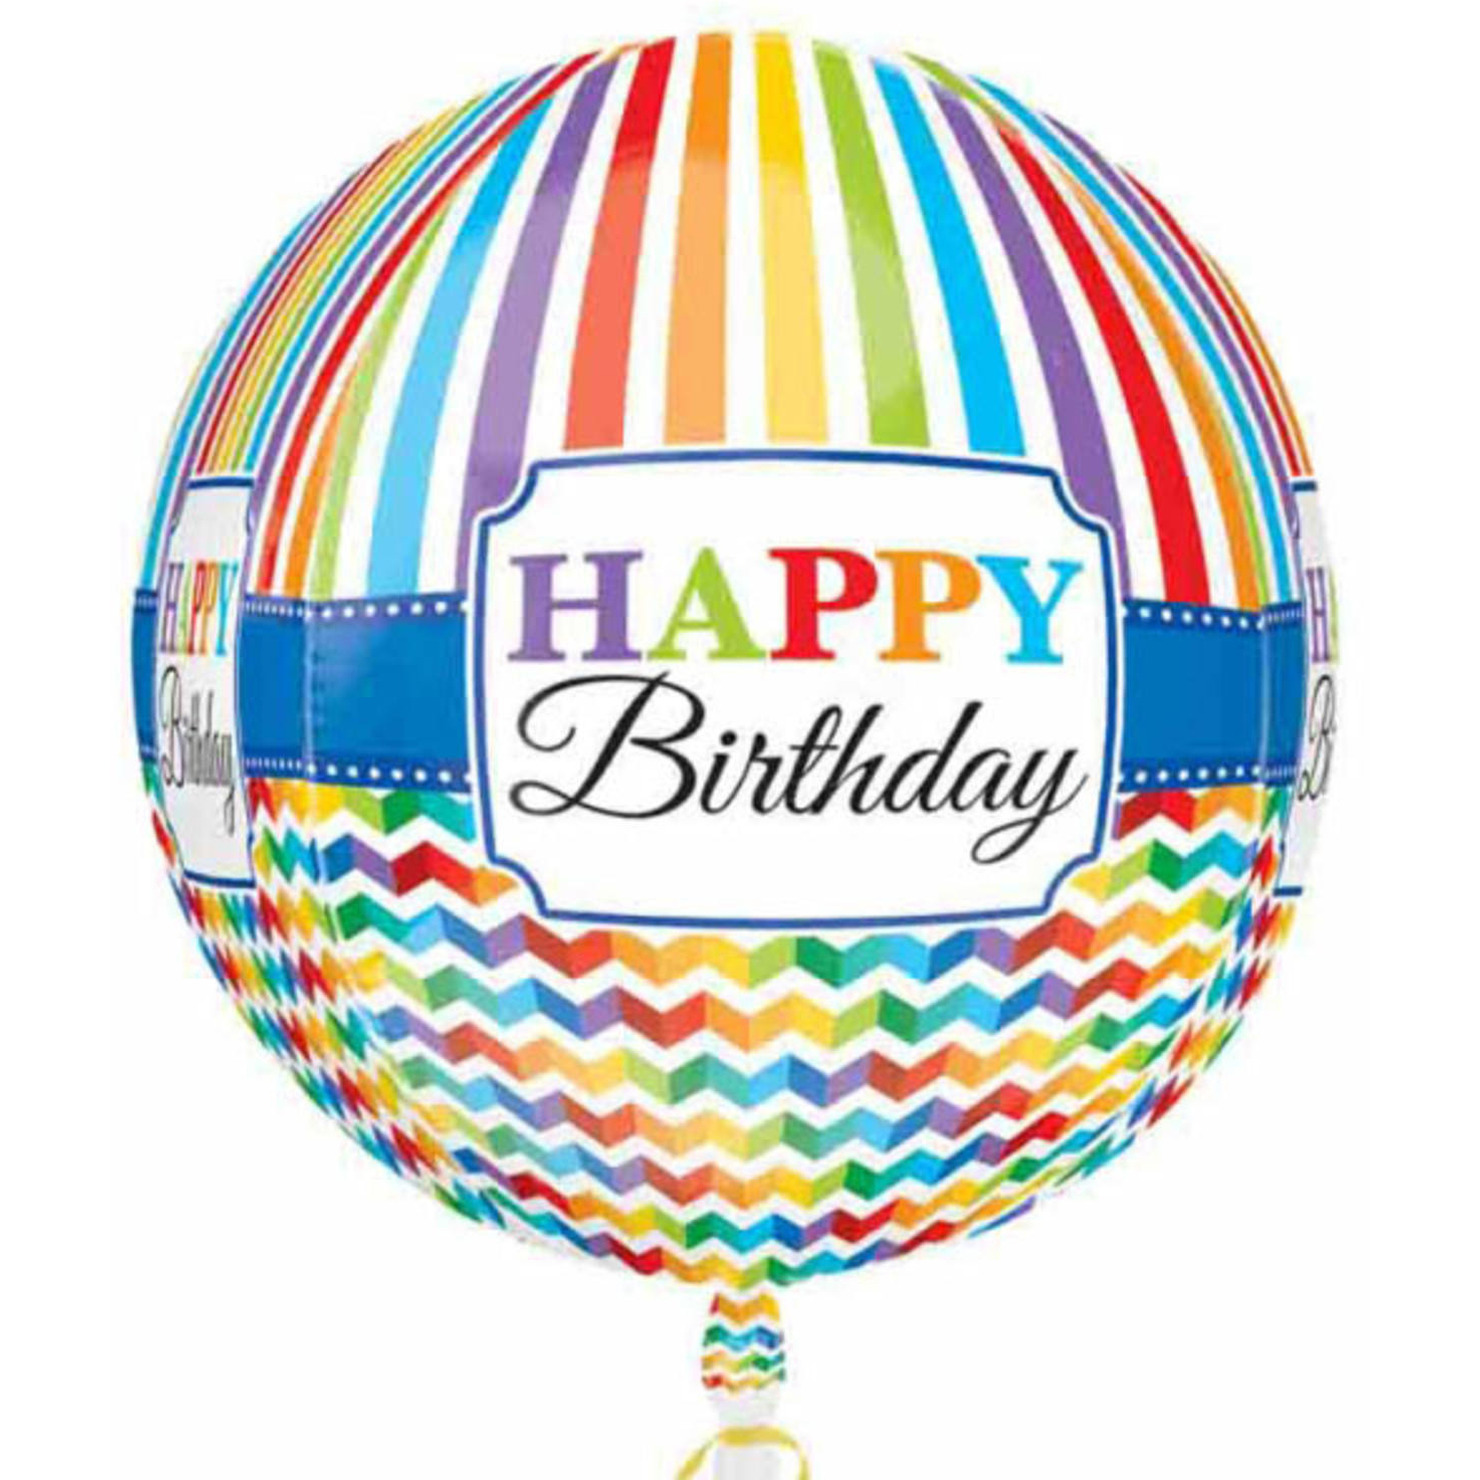 Folie ballon rond/orbz Happy Birthday 40 cm -